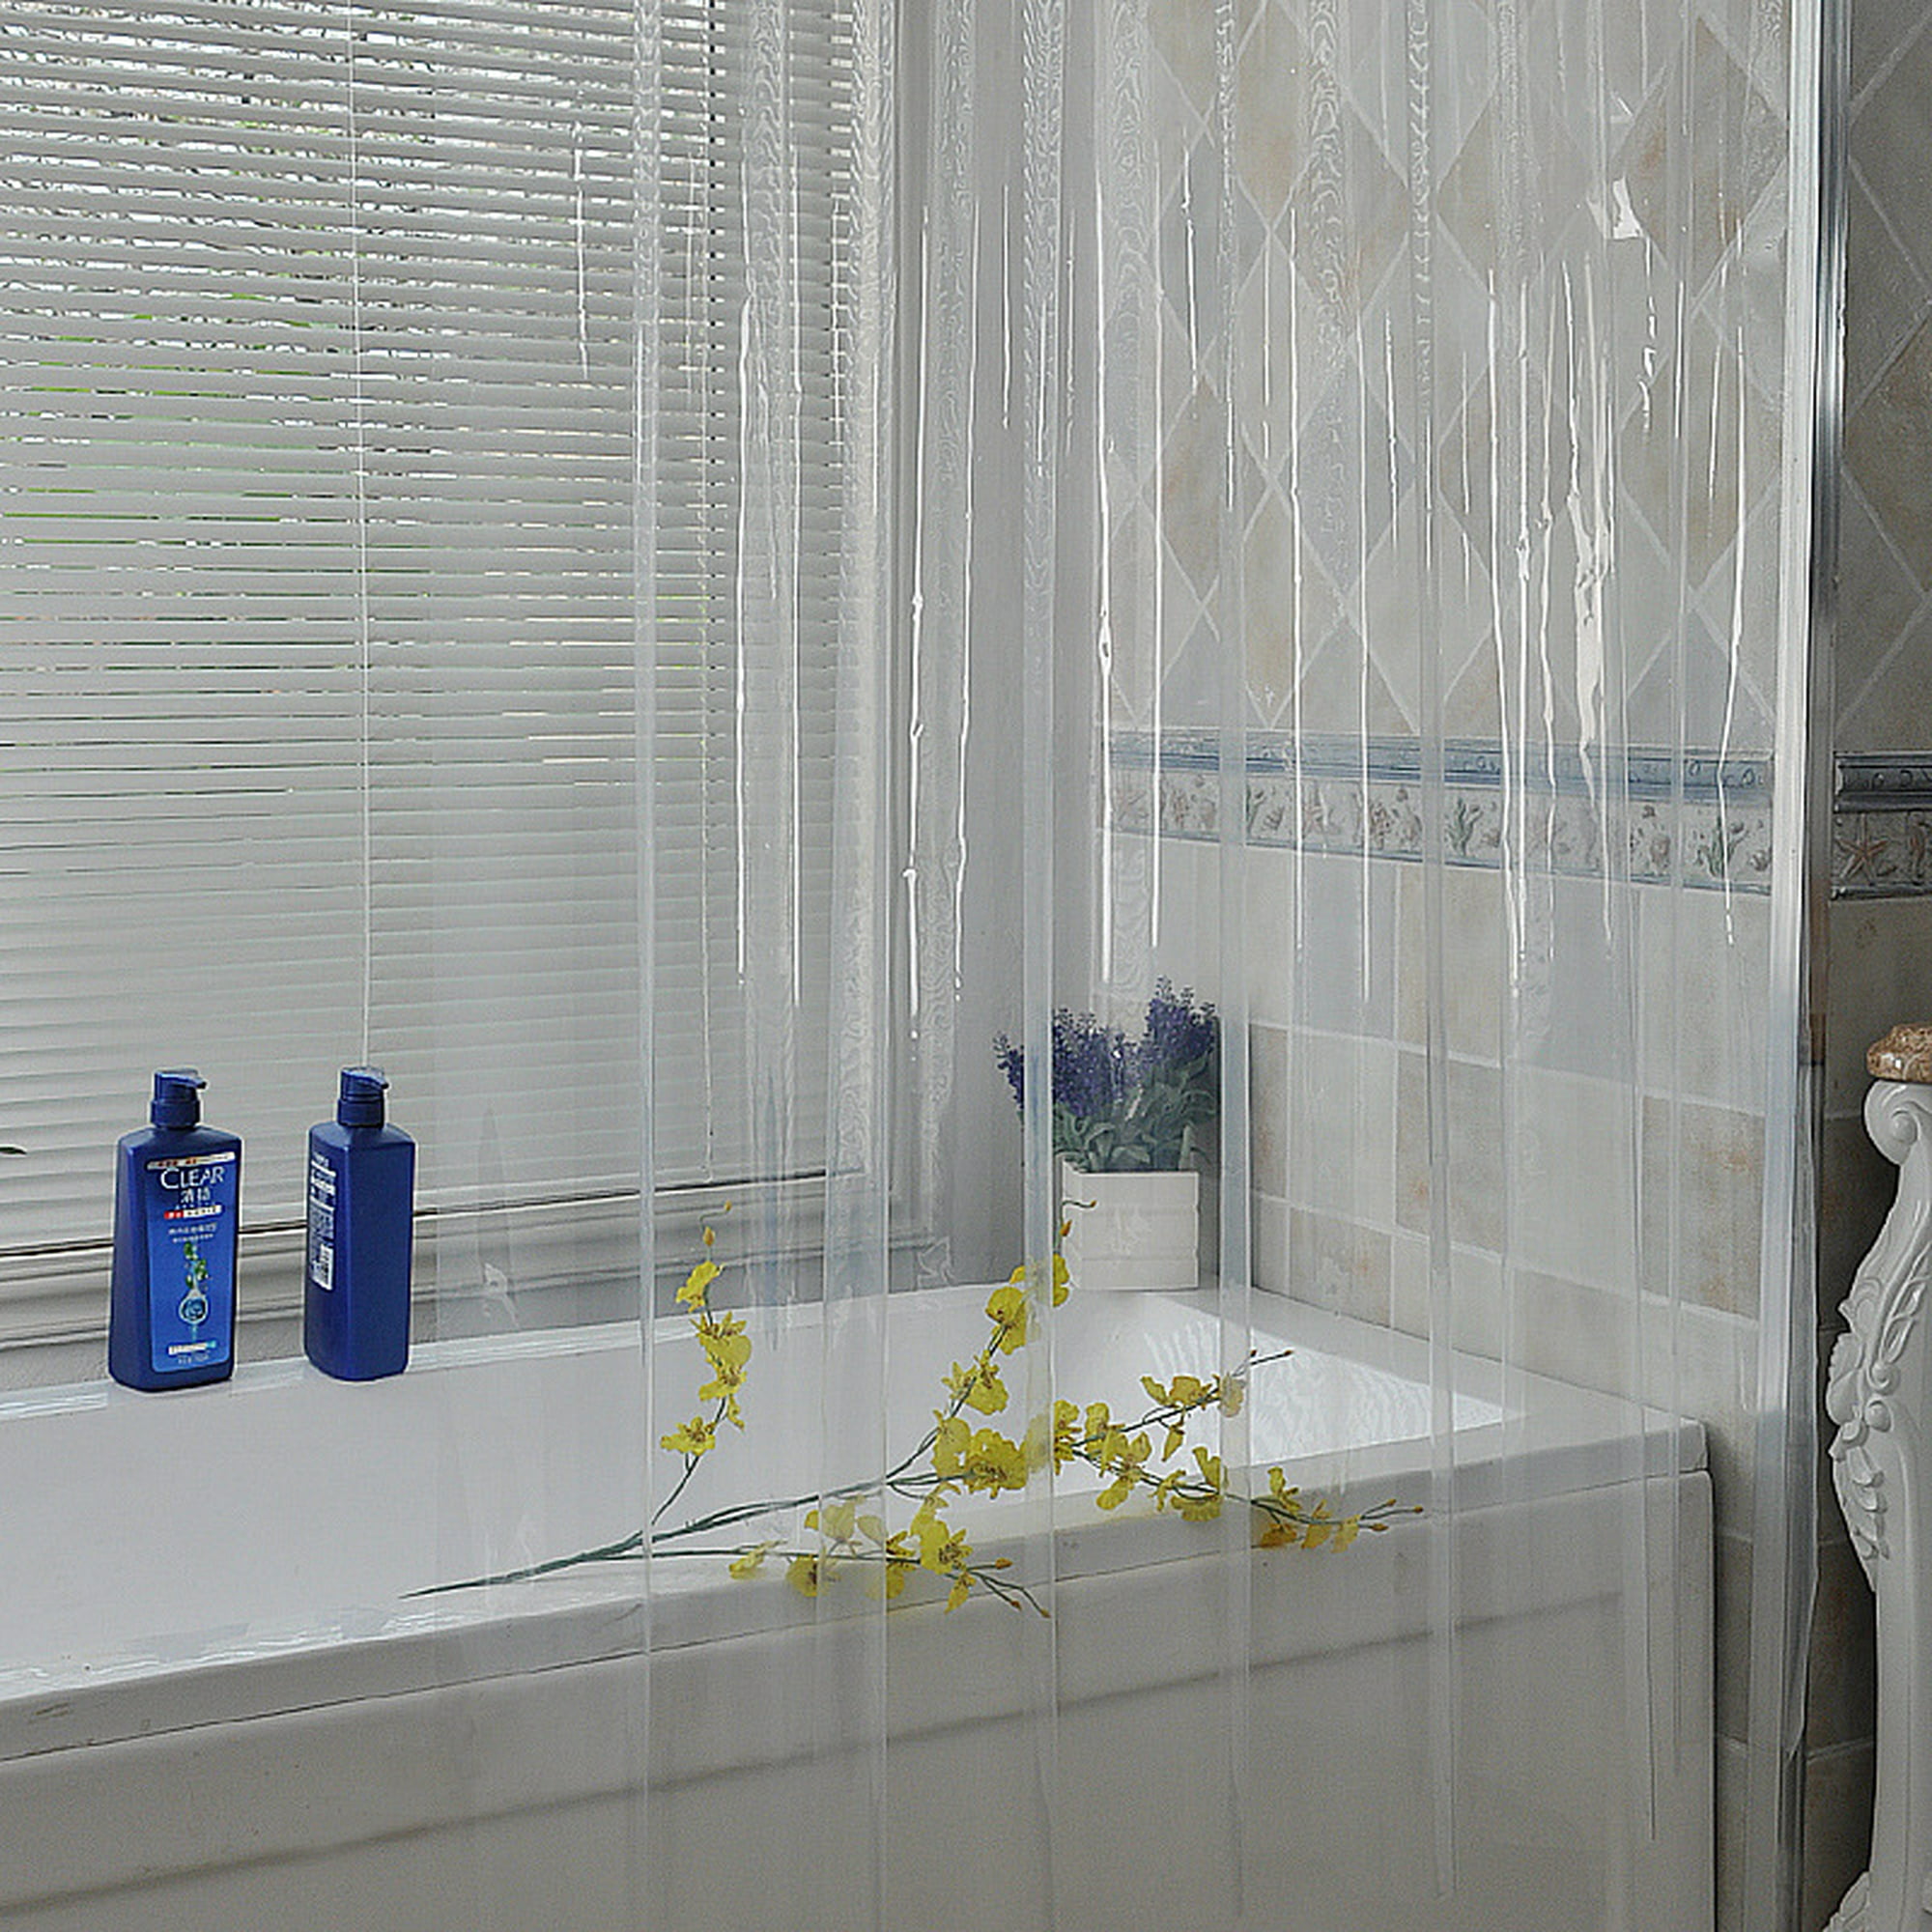 Cortina de ducha impermeable transparente, Mode de Mujer